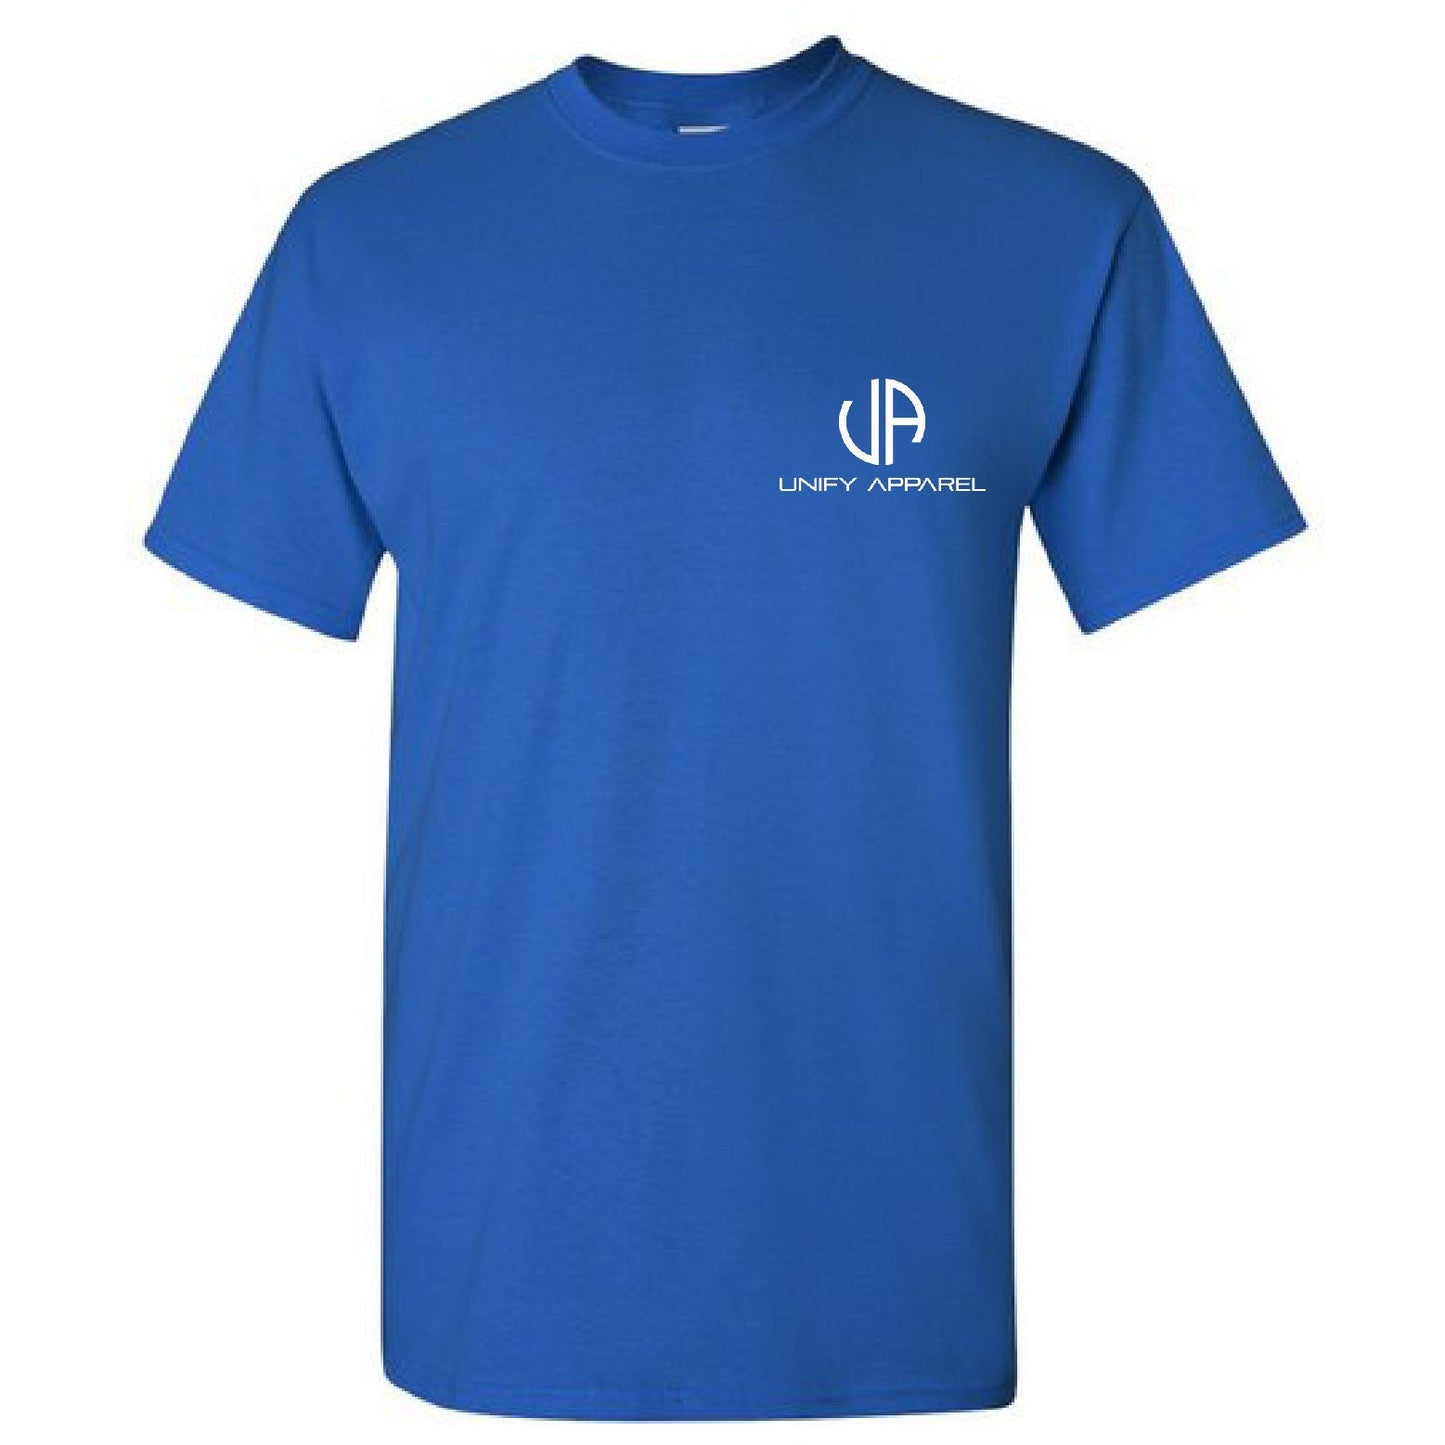 Royal Blue Peace Love Unify T-Shirt